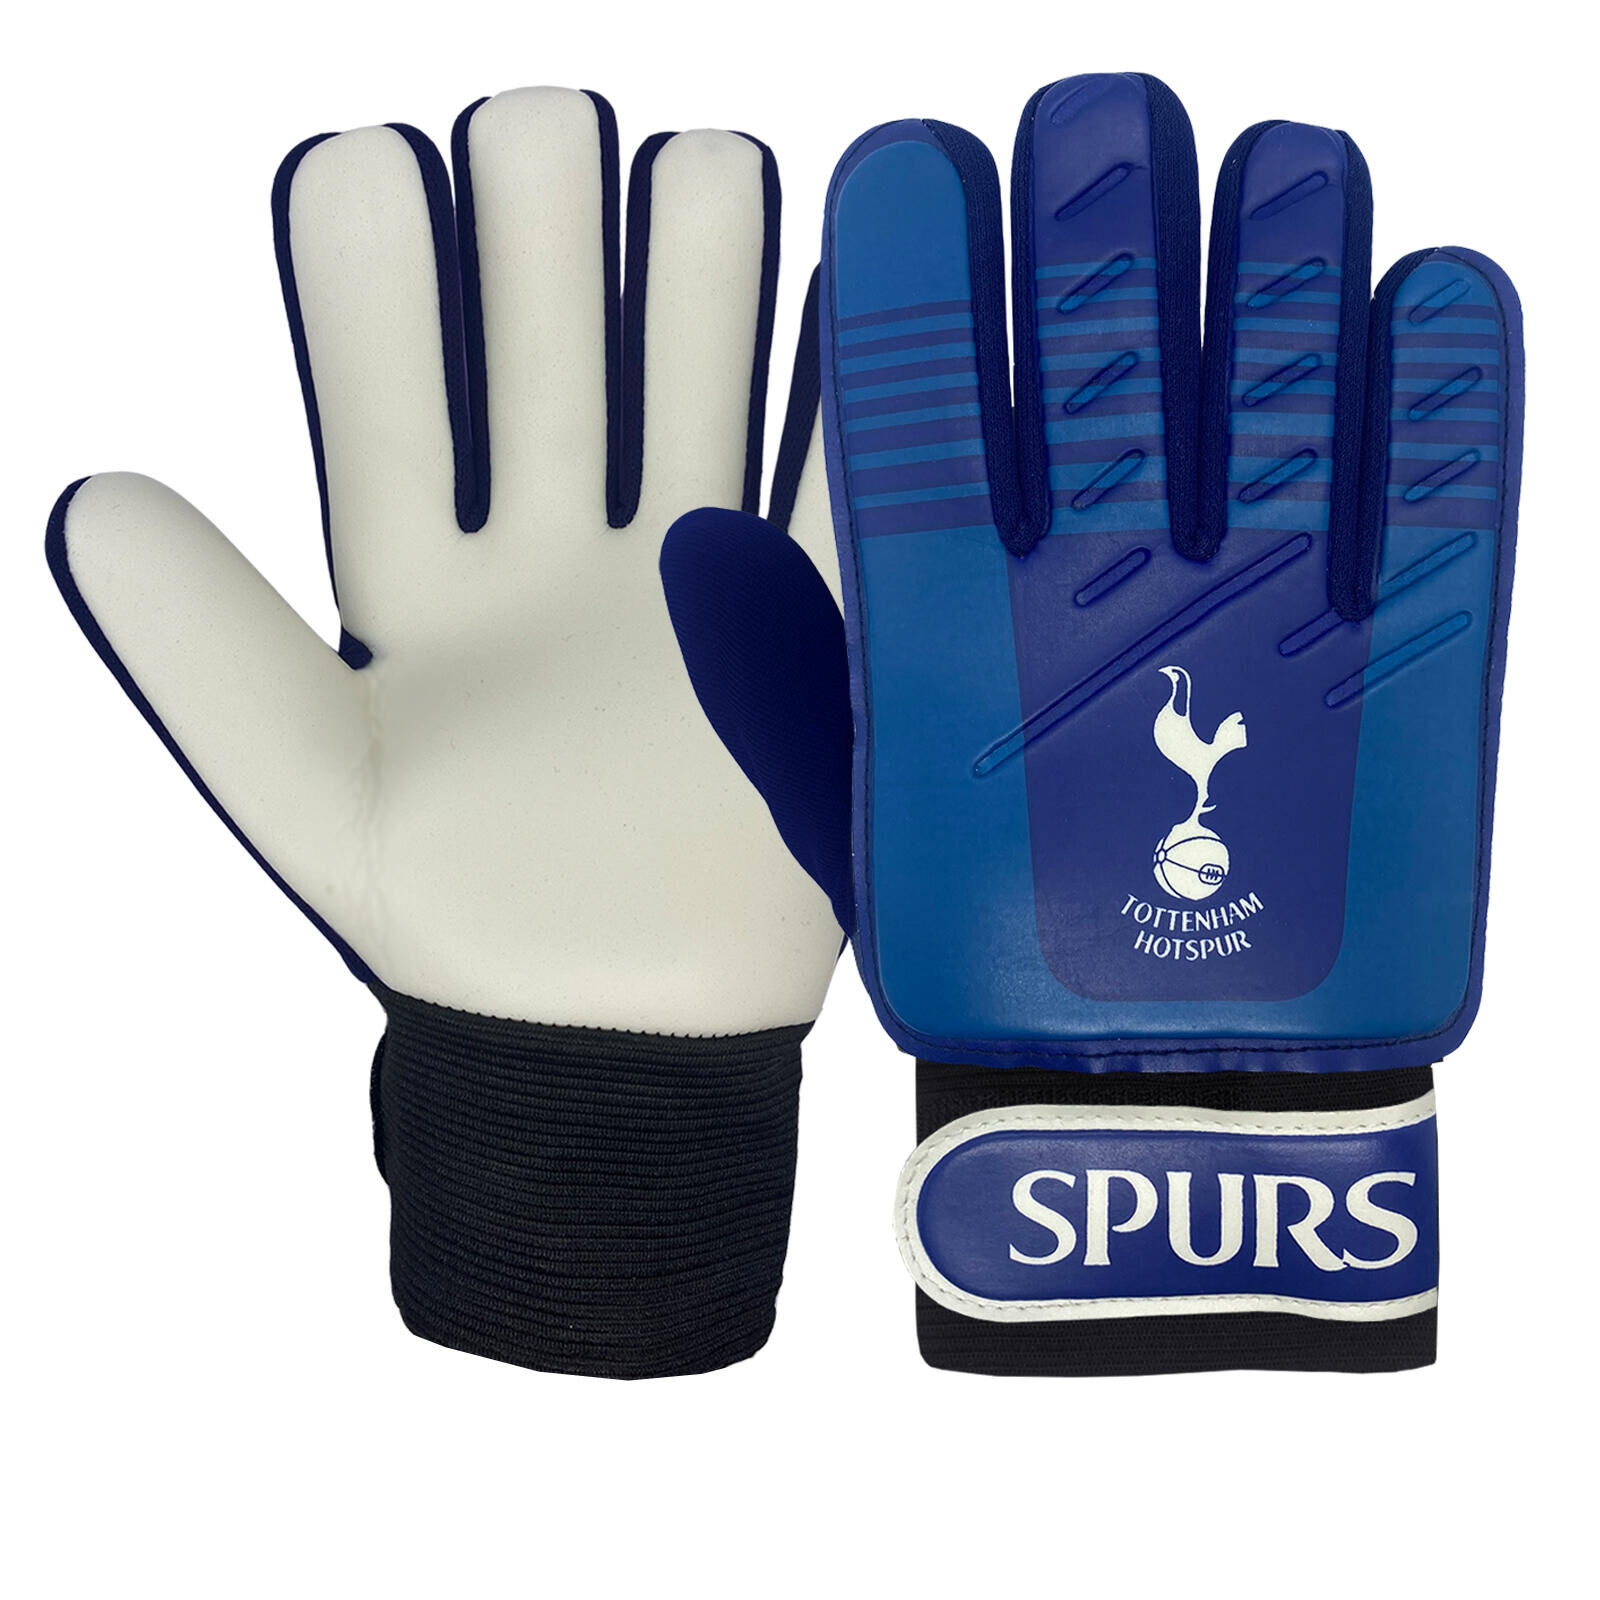 TOTTENHAM HOTSPUR Tottenham Hotspur Boys Gloves Goalie Goalkeeper Youths OFFICIAL Football Gift